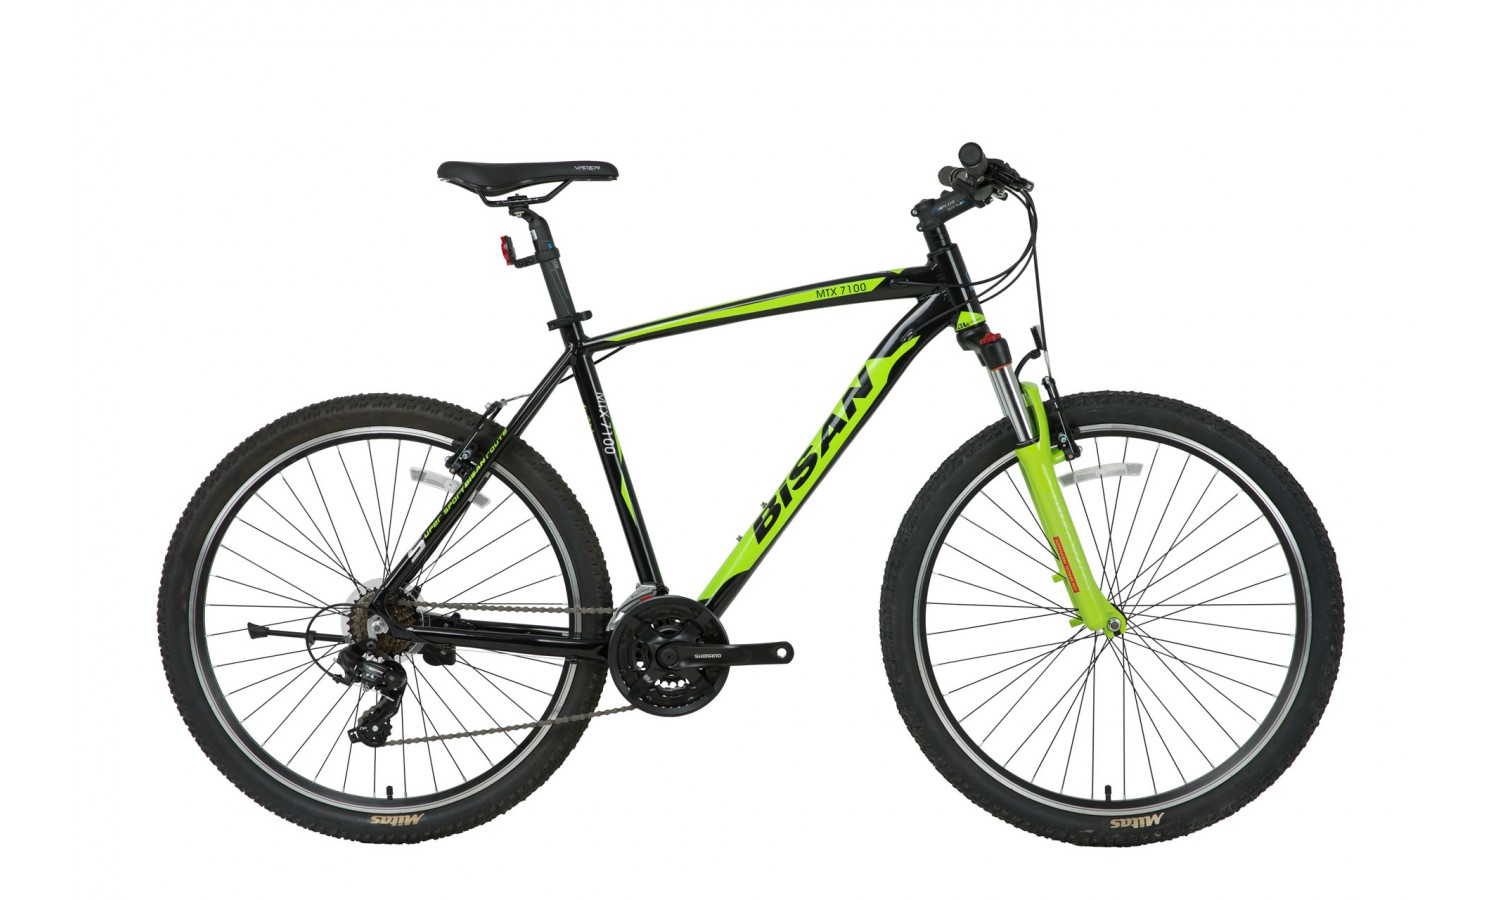 Bisan Mtx 7100 29 V Dağ Bisikleti (Siyah Yeşil)